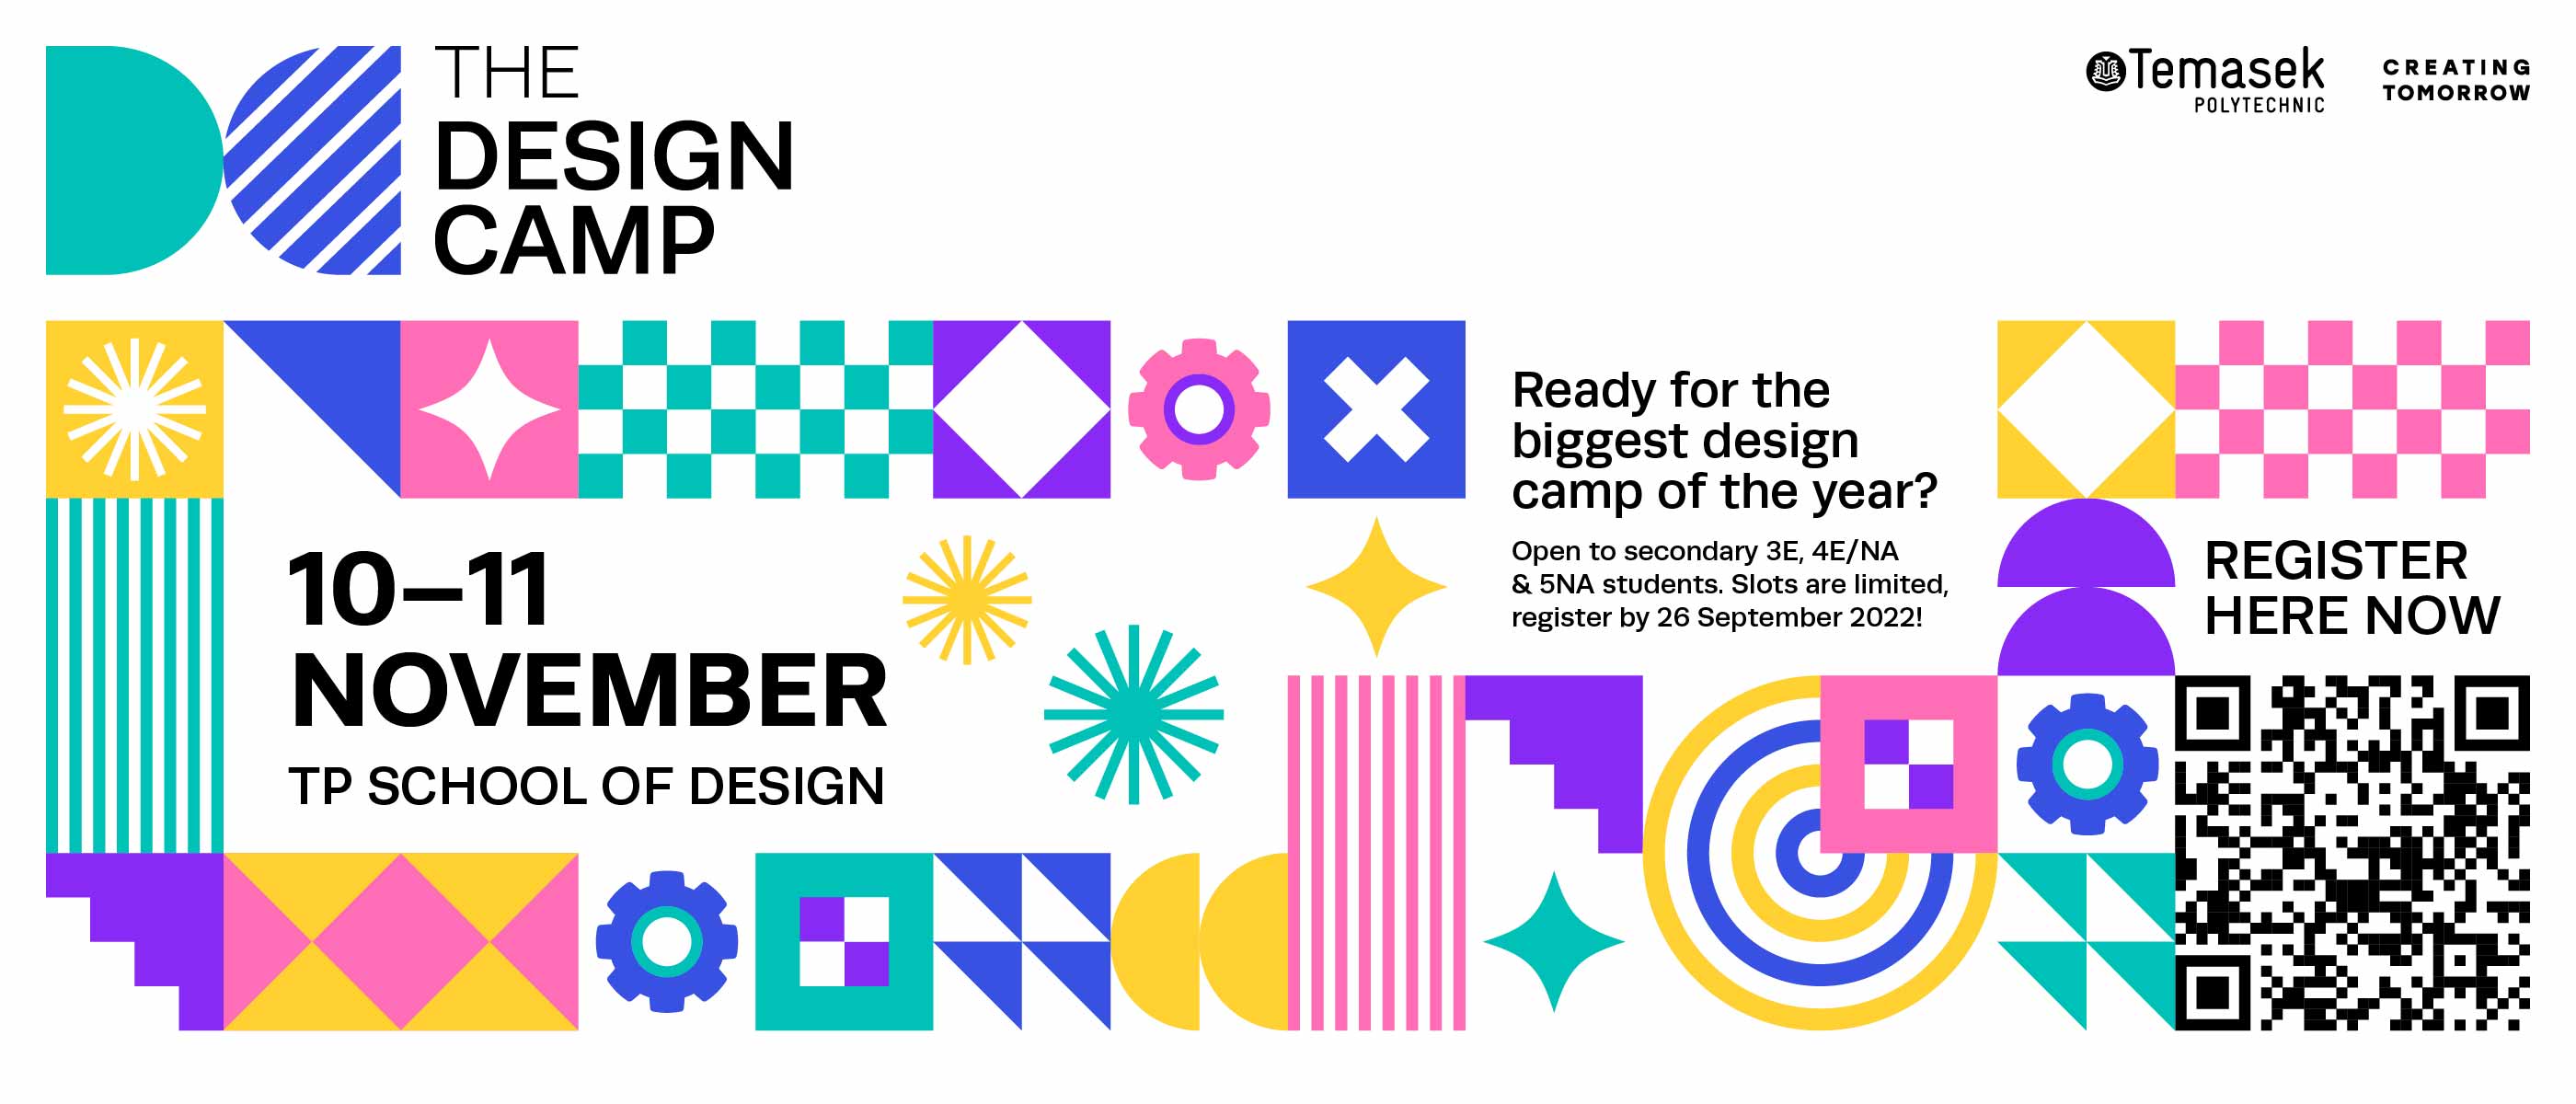 The Design Camp 2022